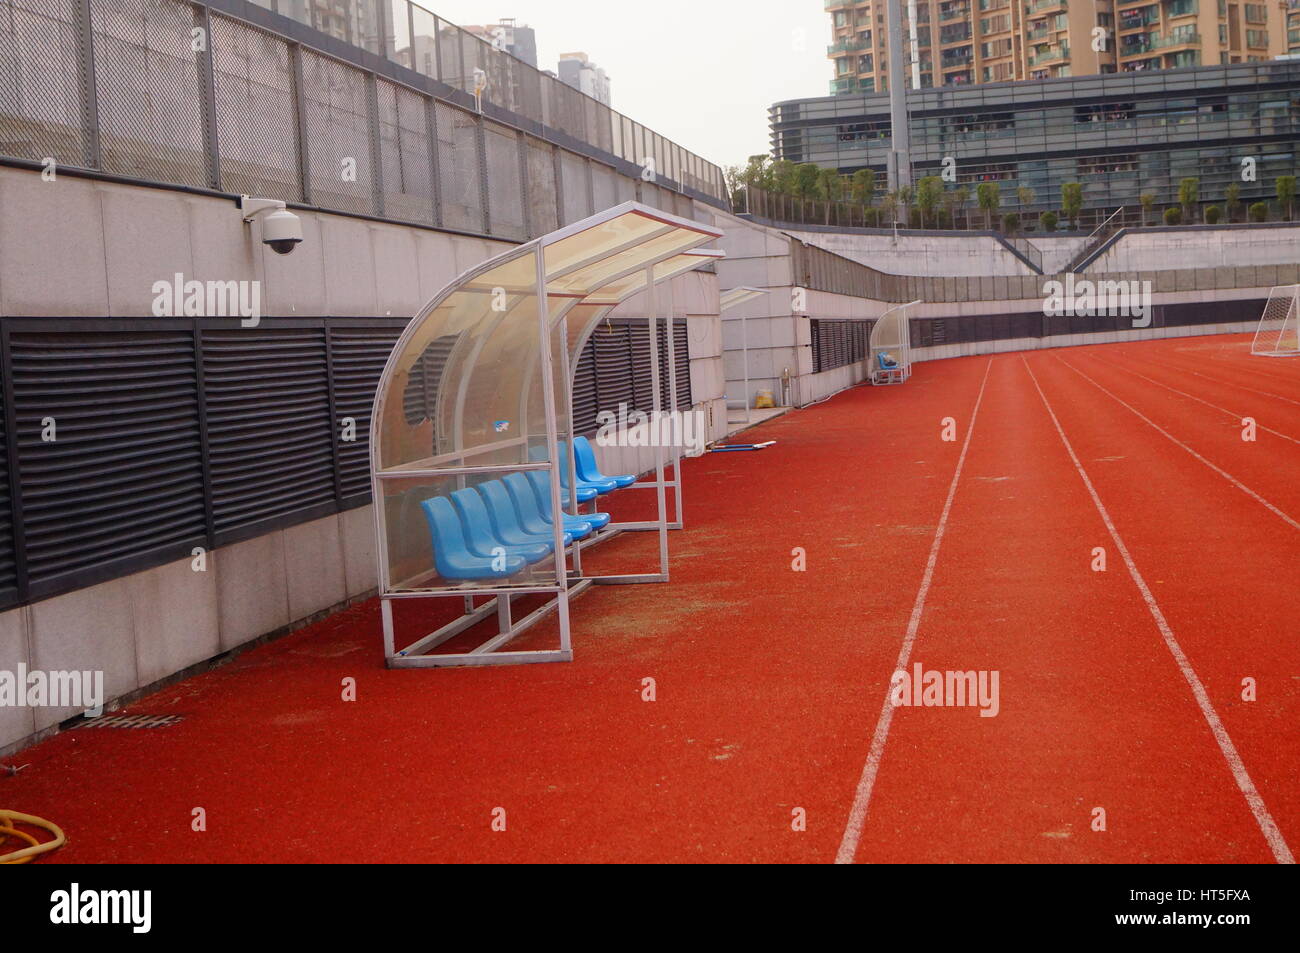 Roter Kunststoff Leichtathletik track im Sportzentrum Baoan, Shenzhen, China. Stockfoto